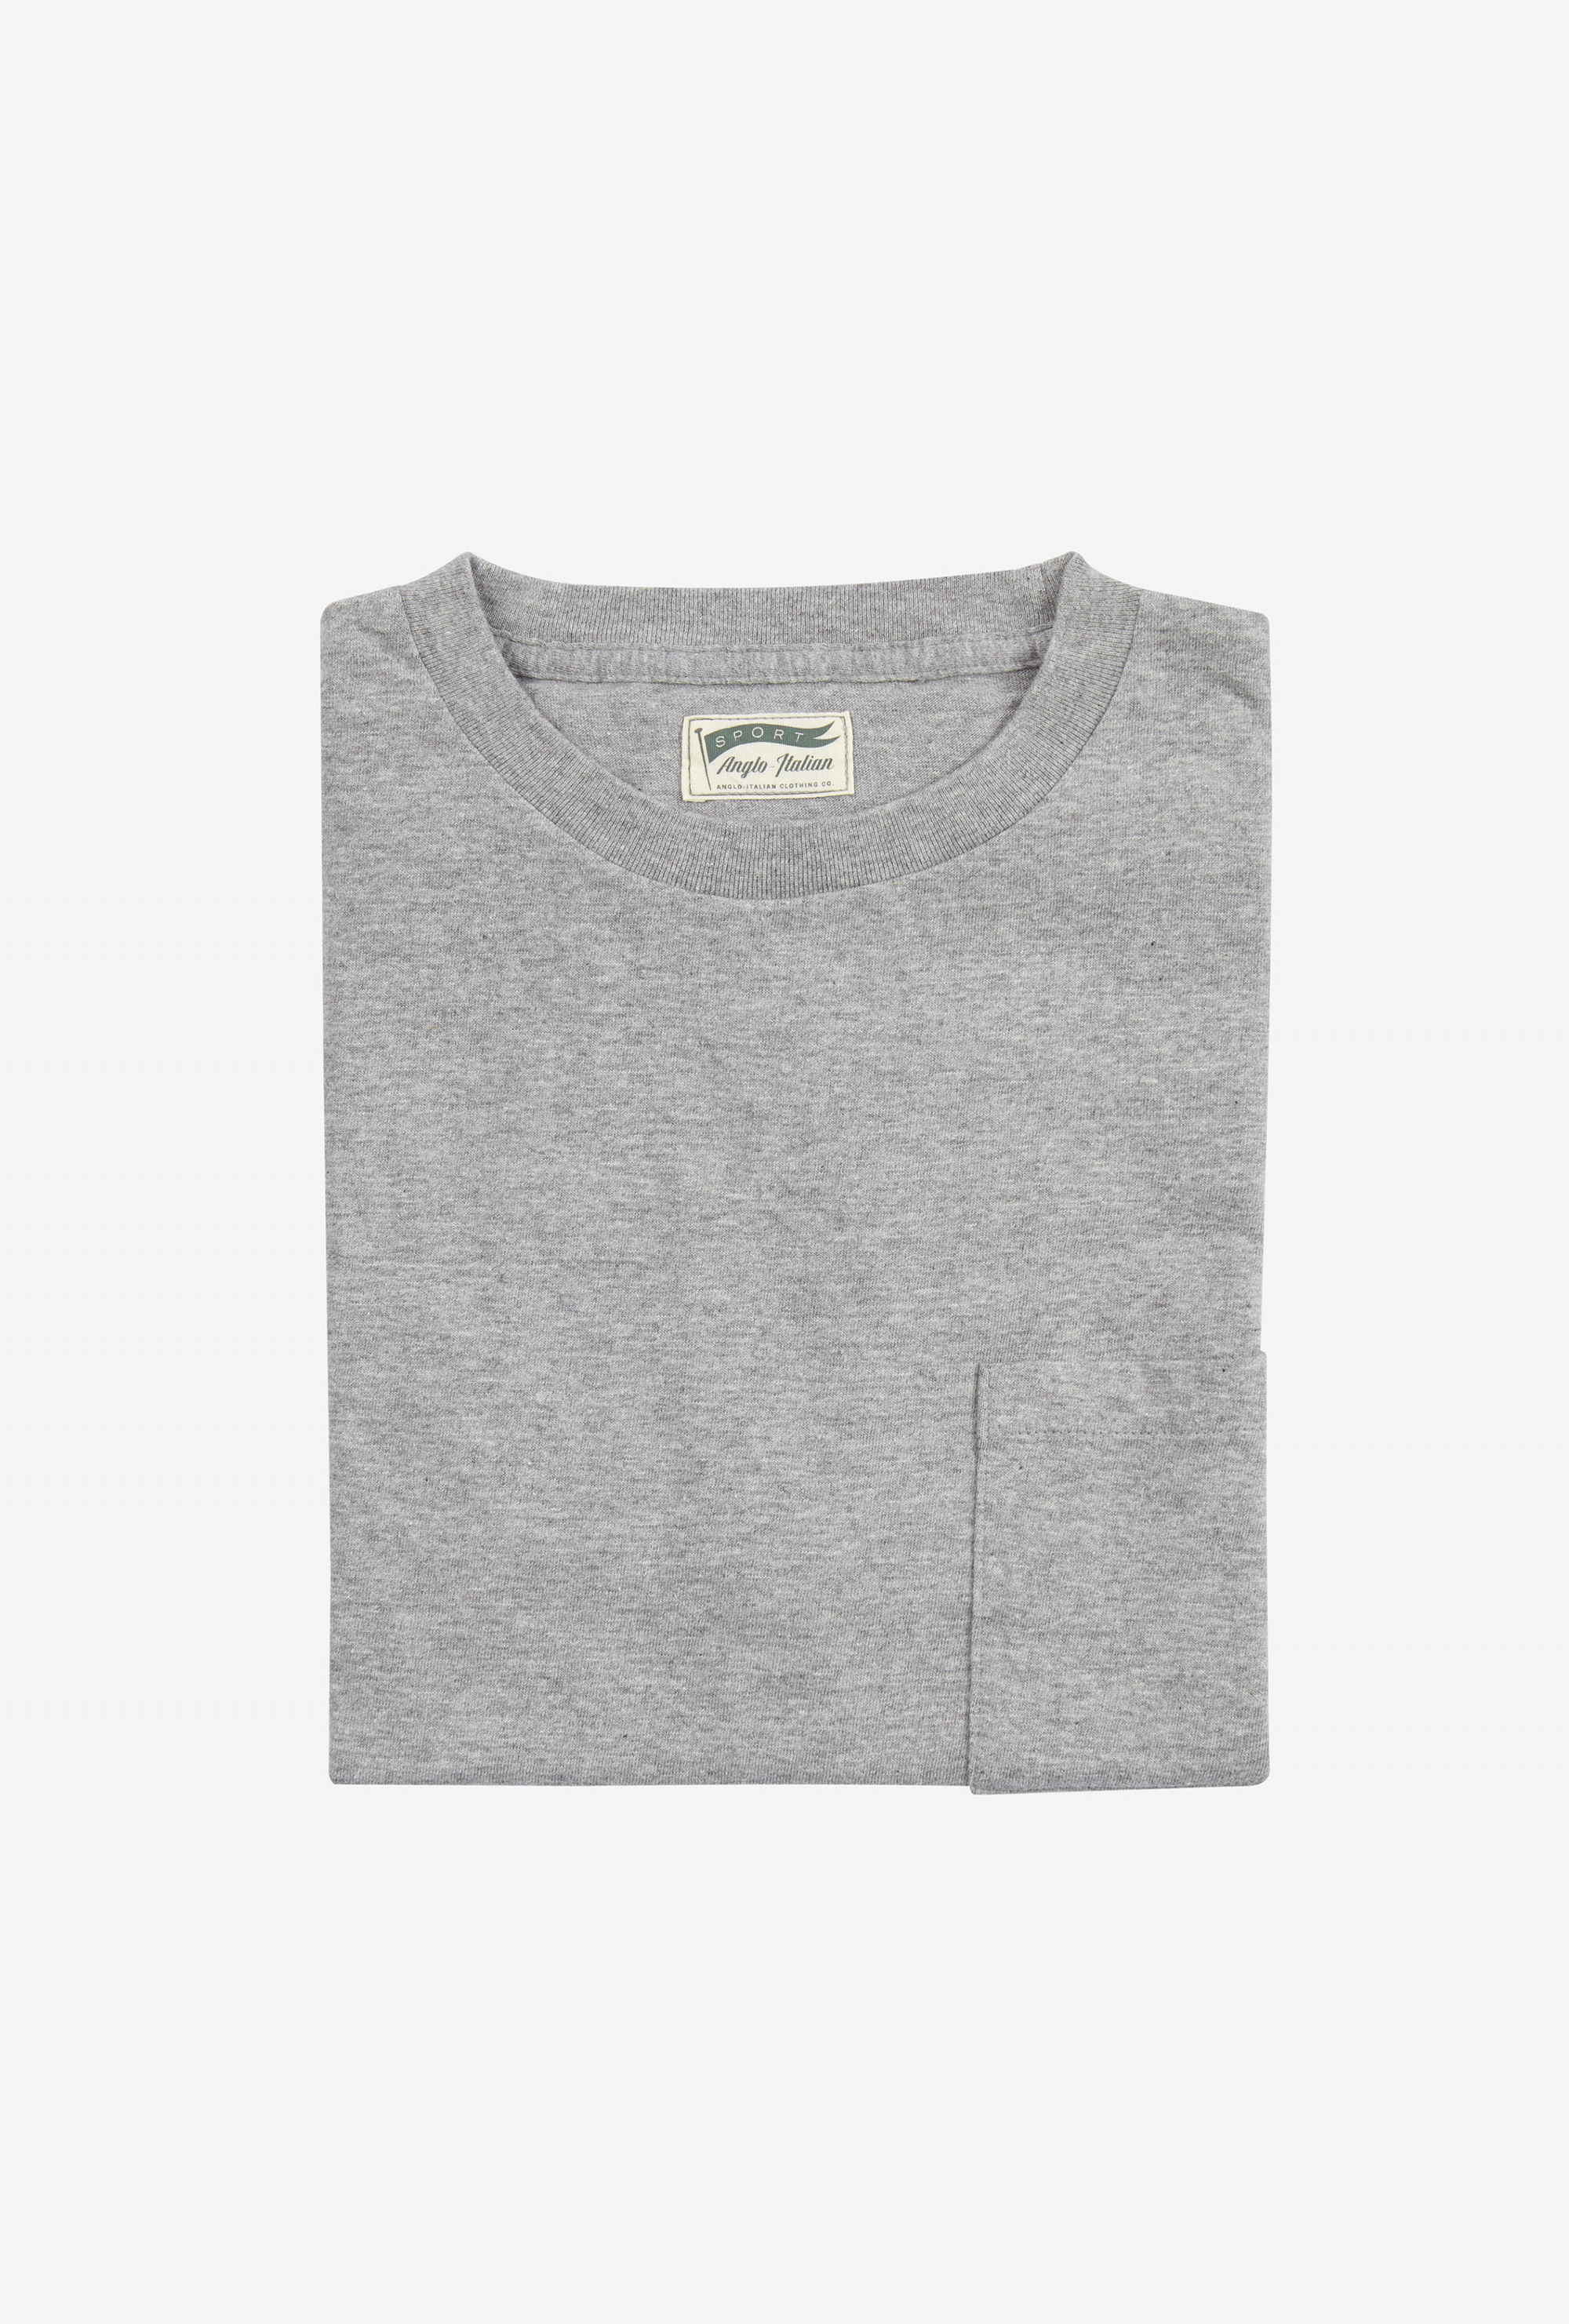 Cotton Pocket T-Shirt Grey